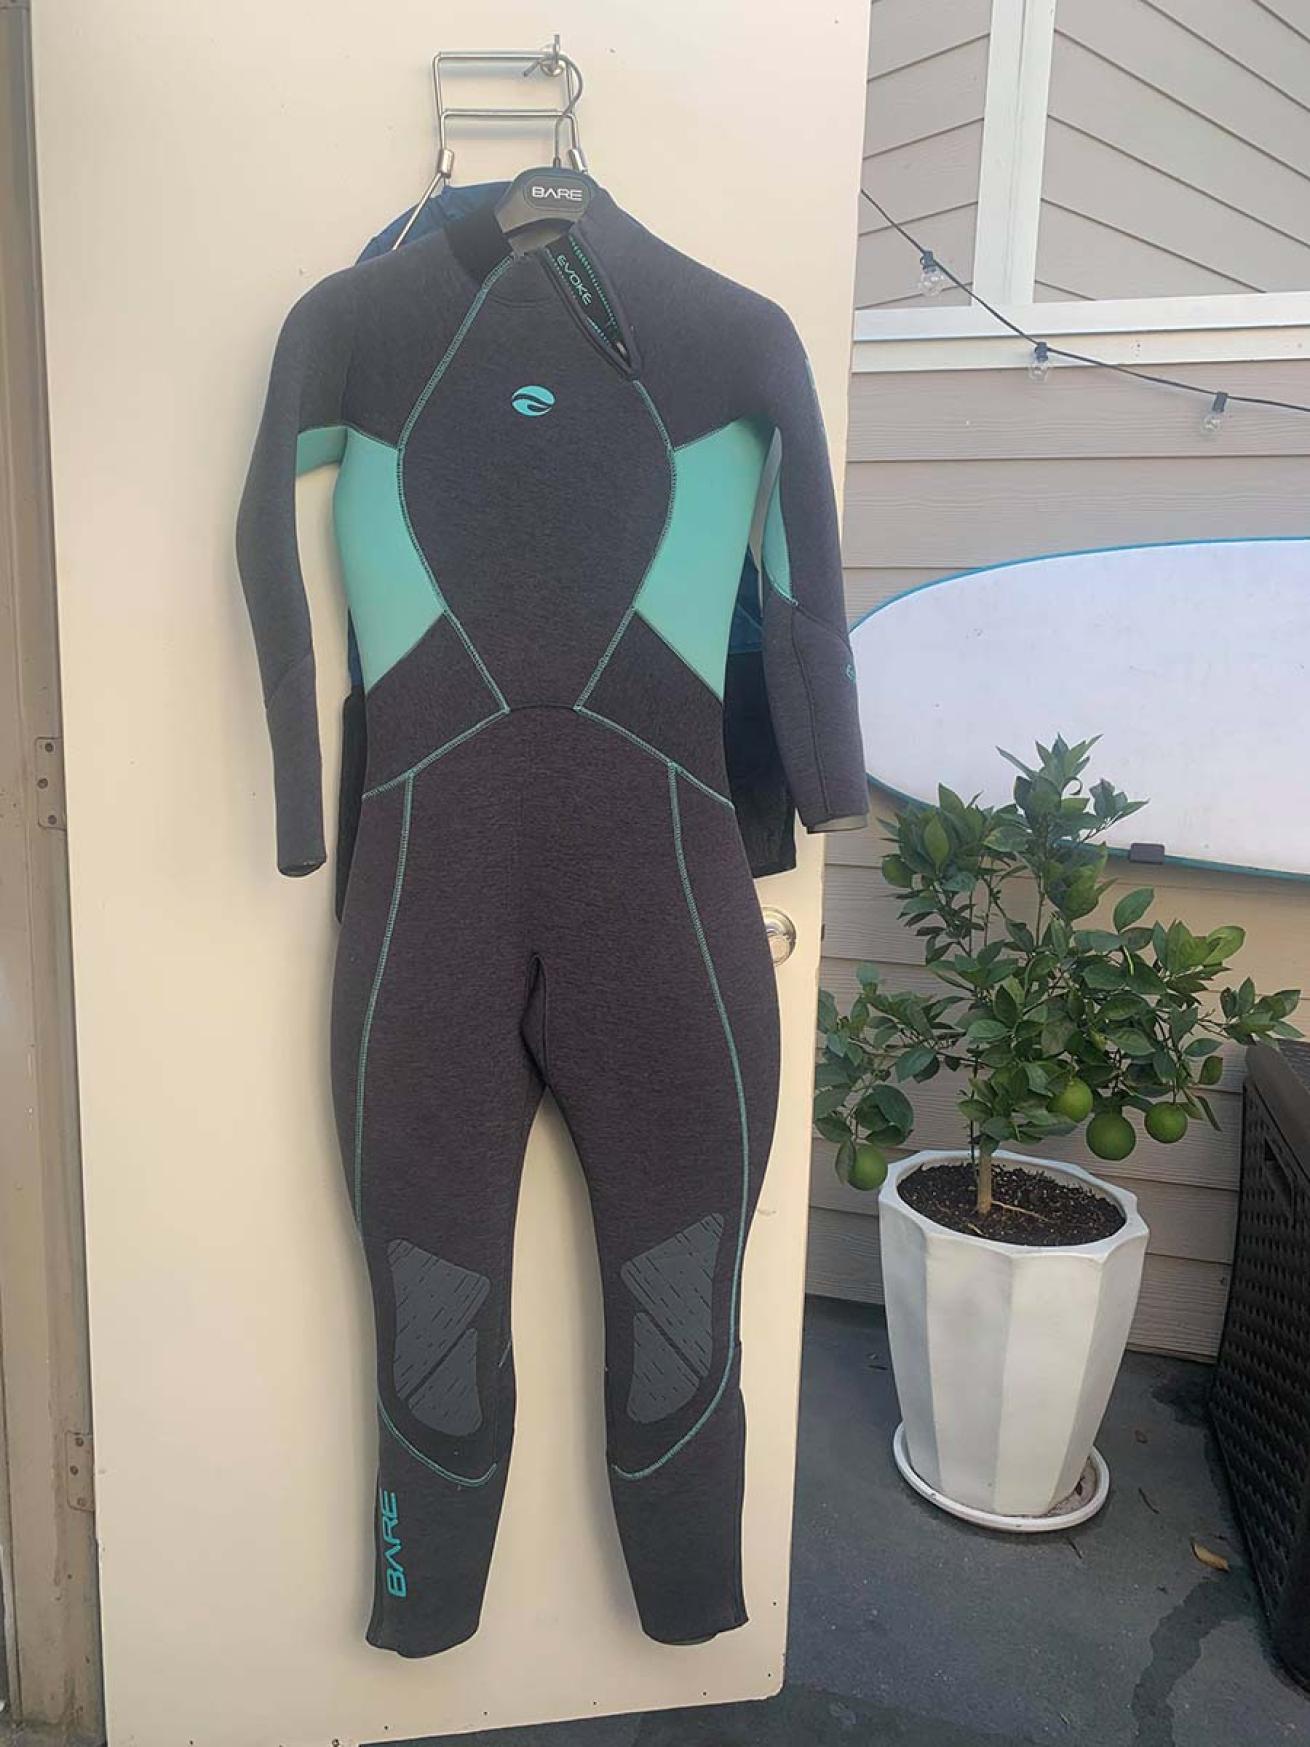 Hanging wetsuit